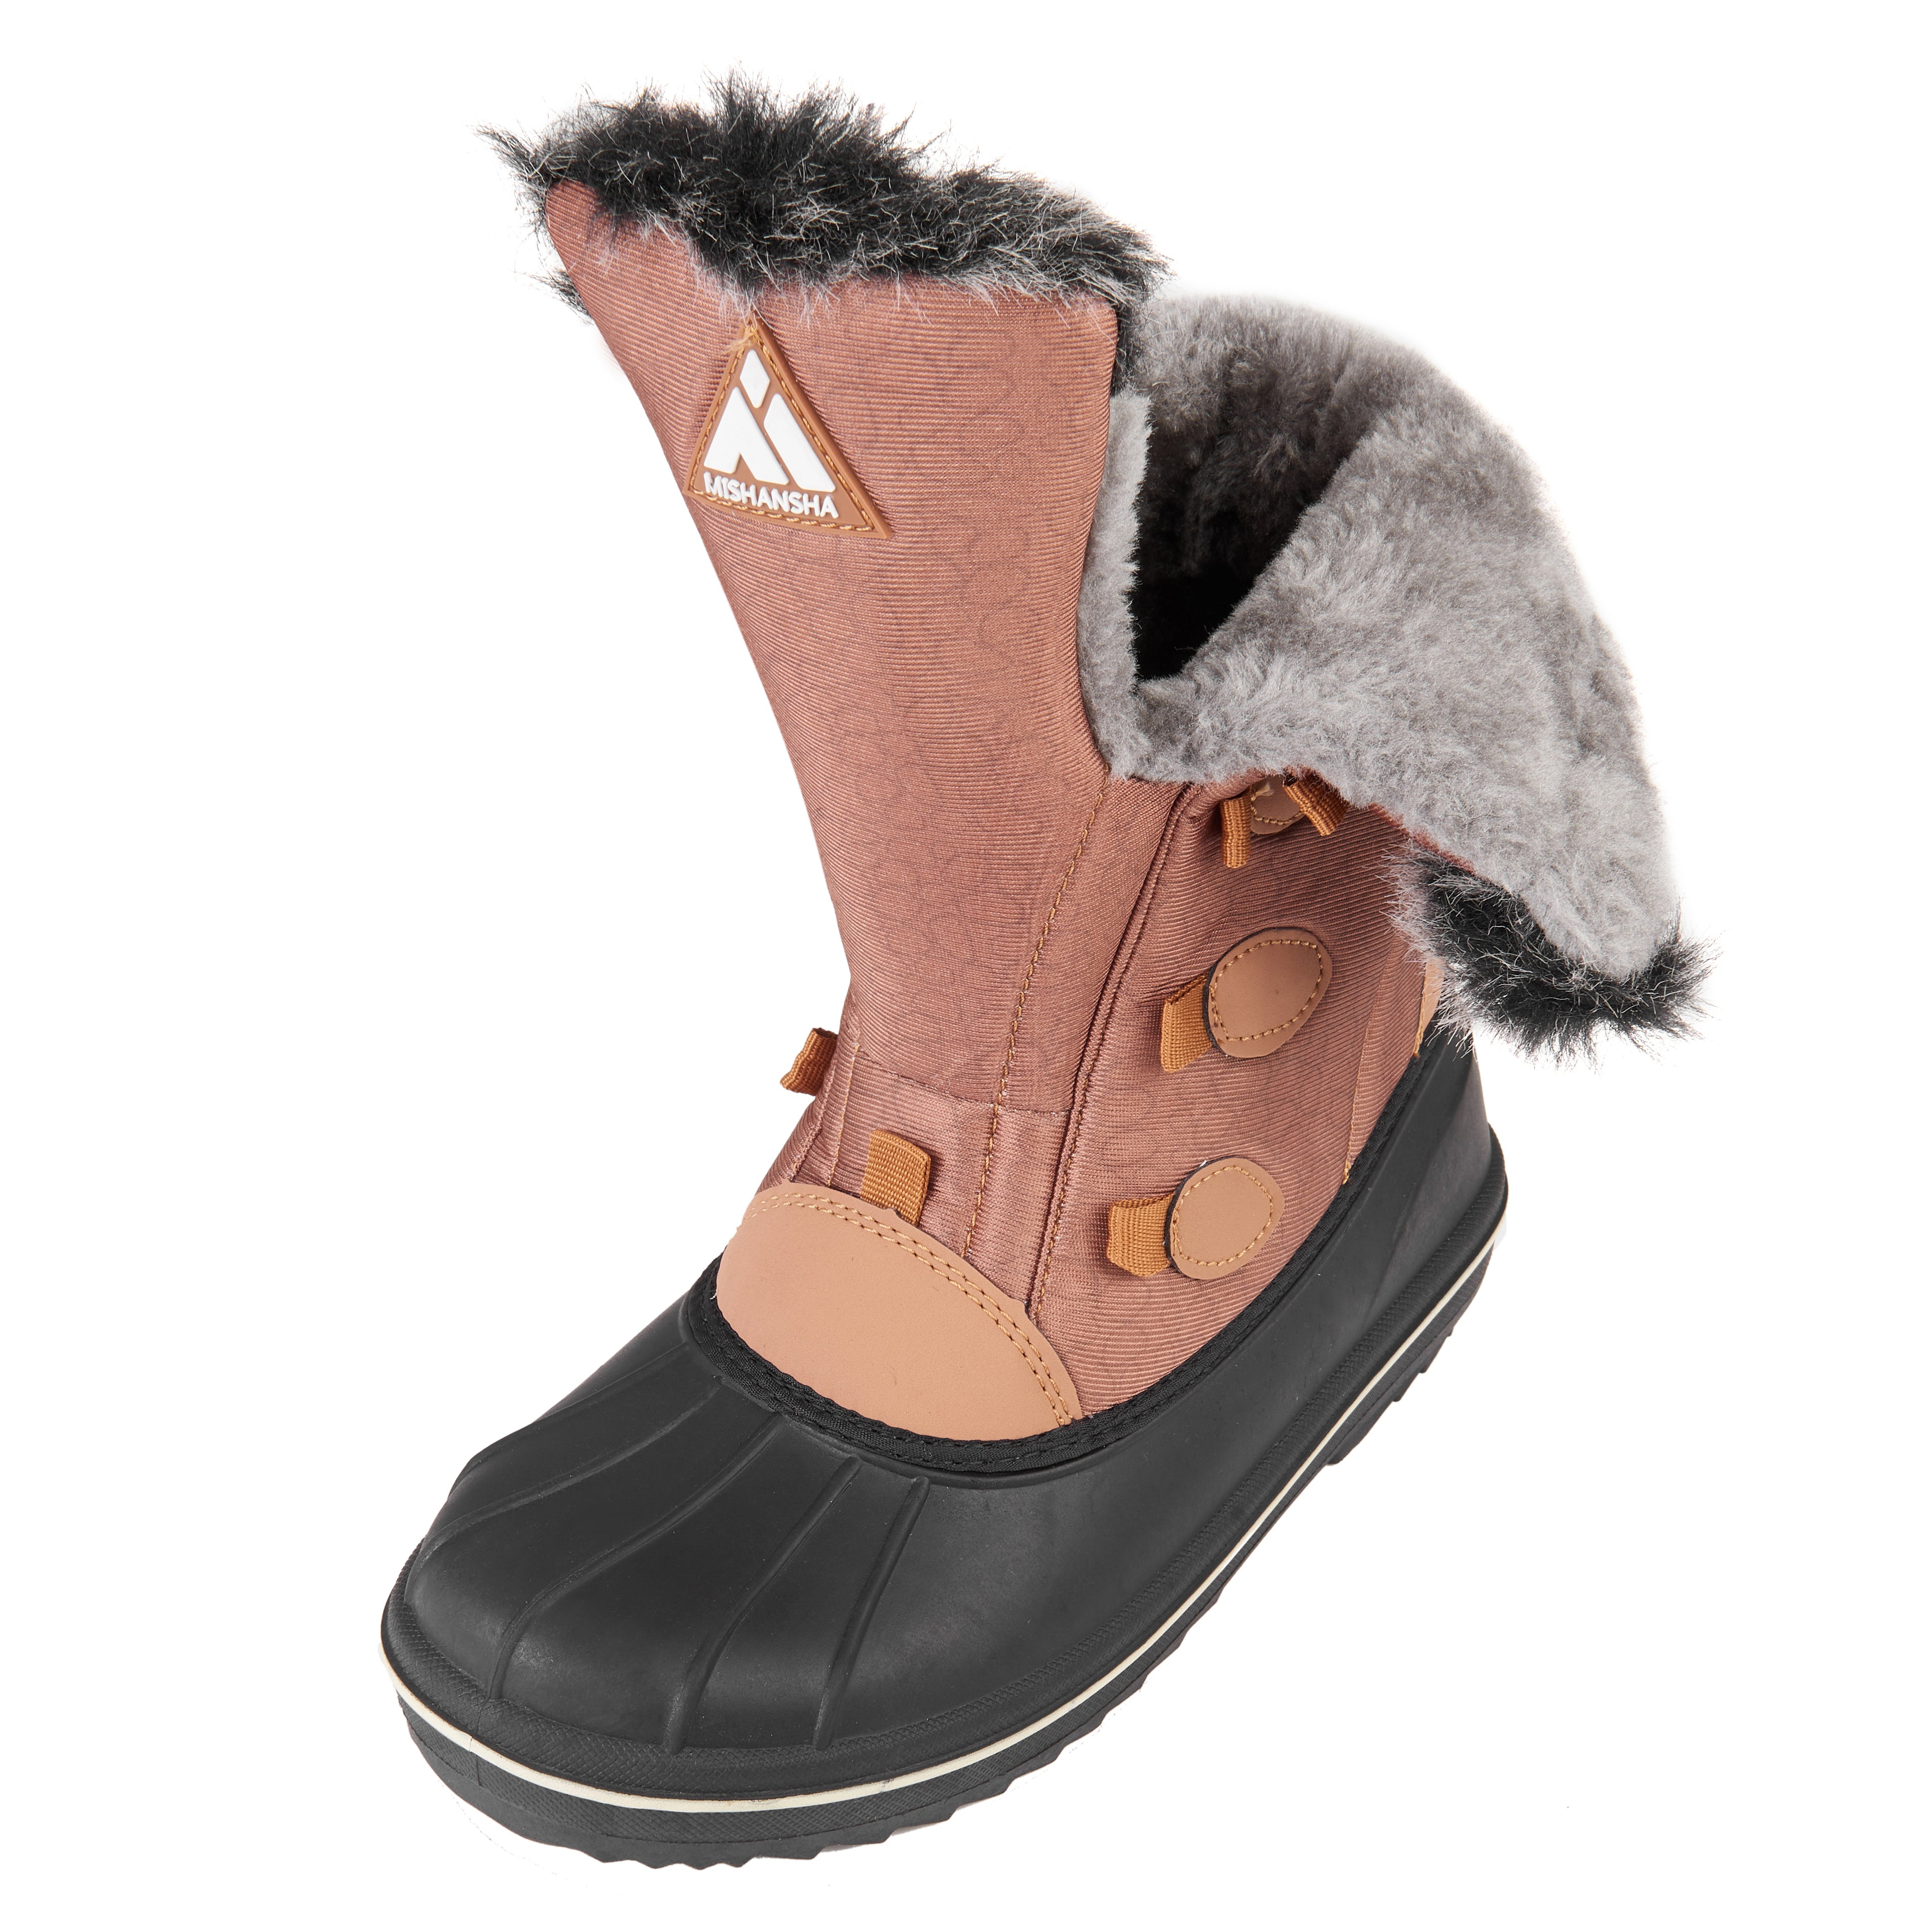  Mishansha Men's Snow Boots Waterproof Winter Boots Fur Lined  Duck Boots Insulated Winter Work Boots Black US 7